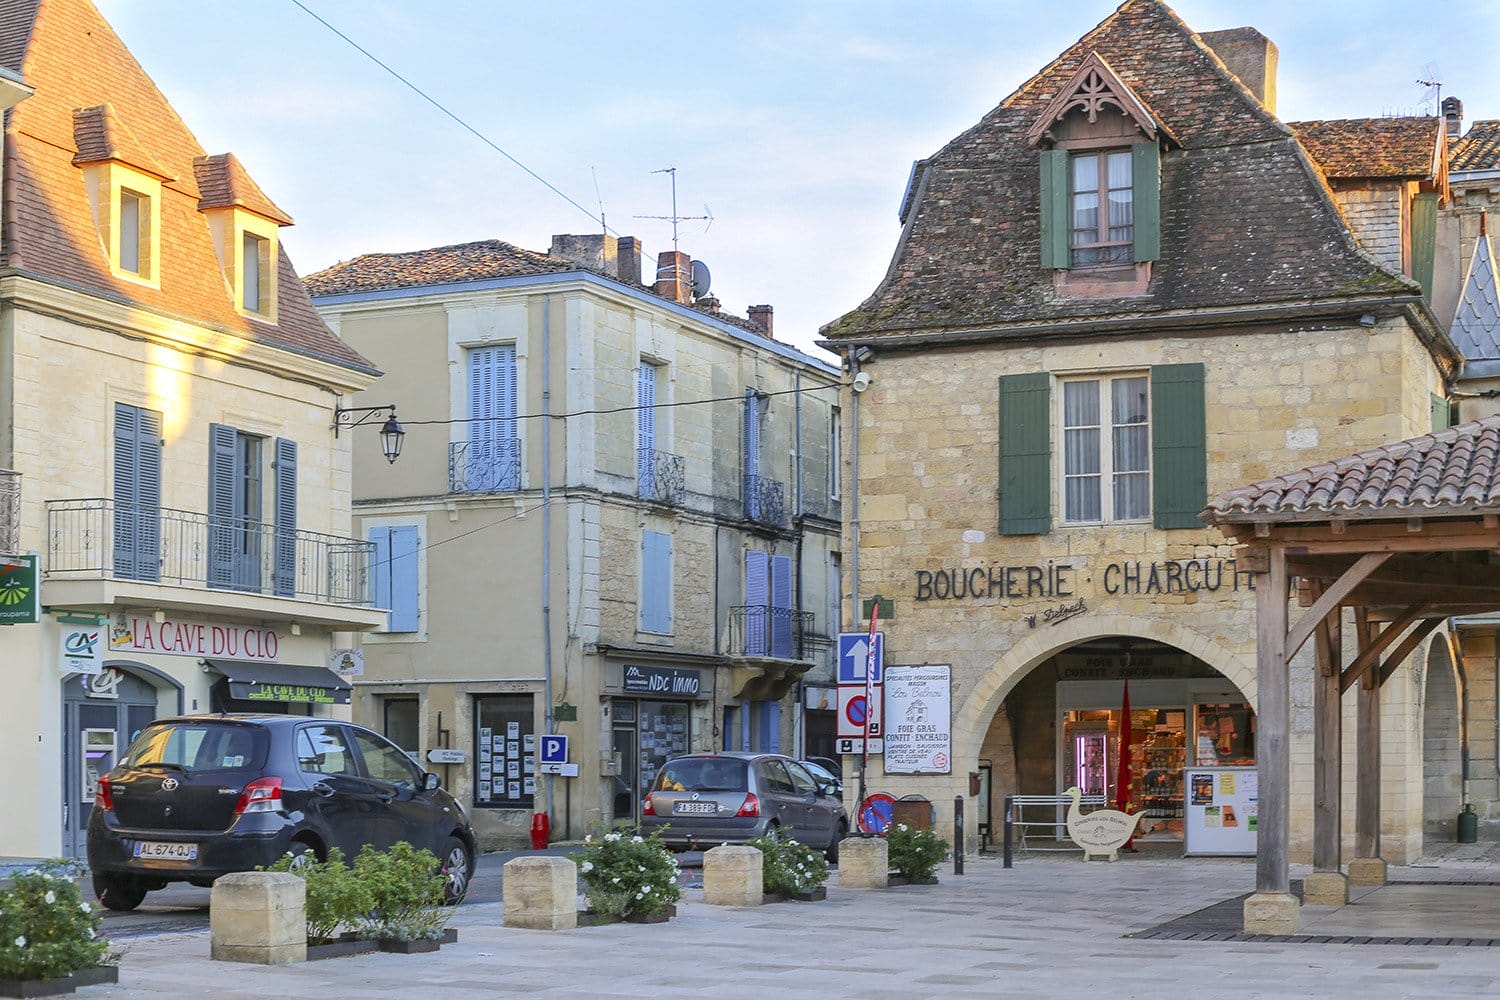 Dordogne market square with local amenities